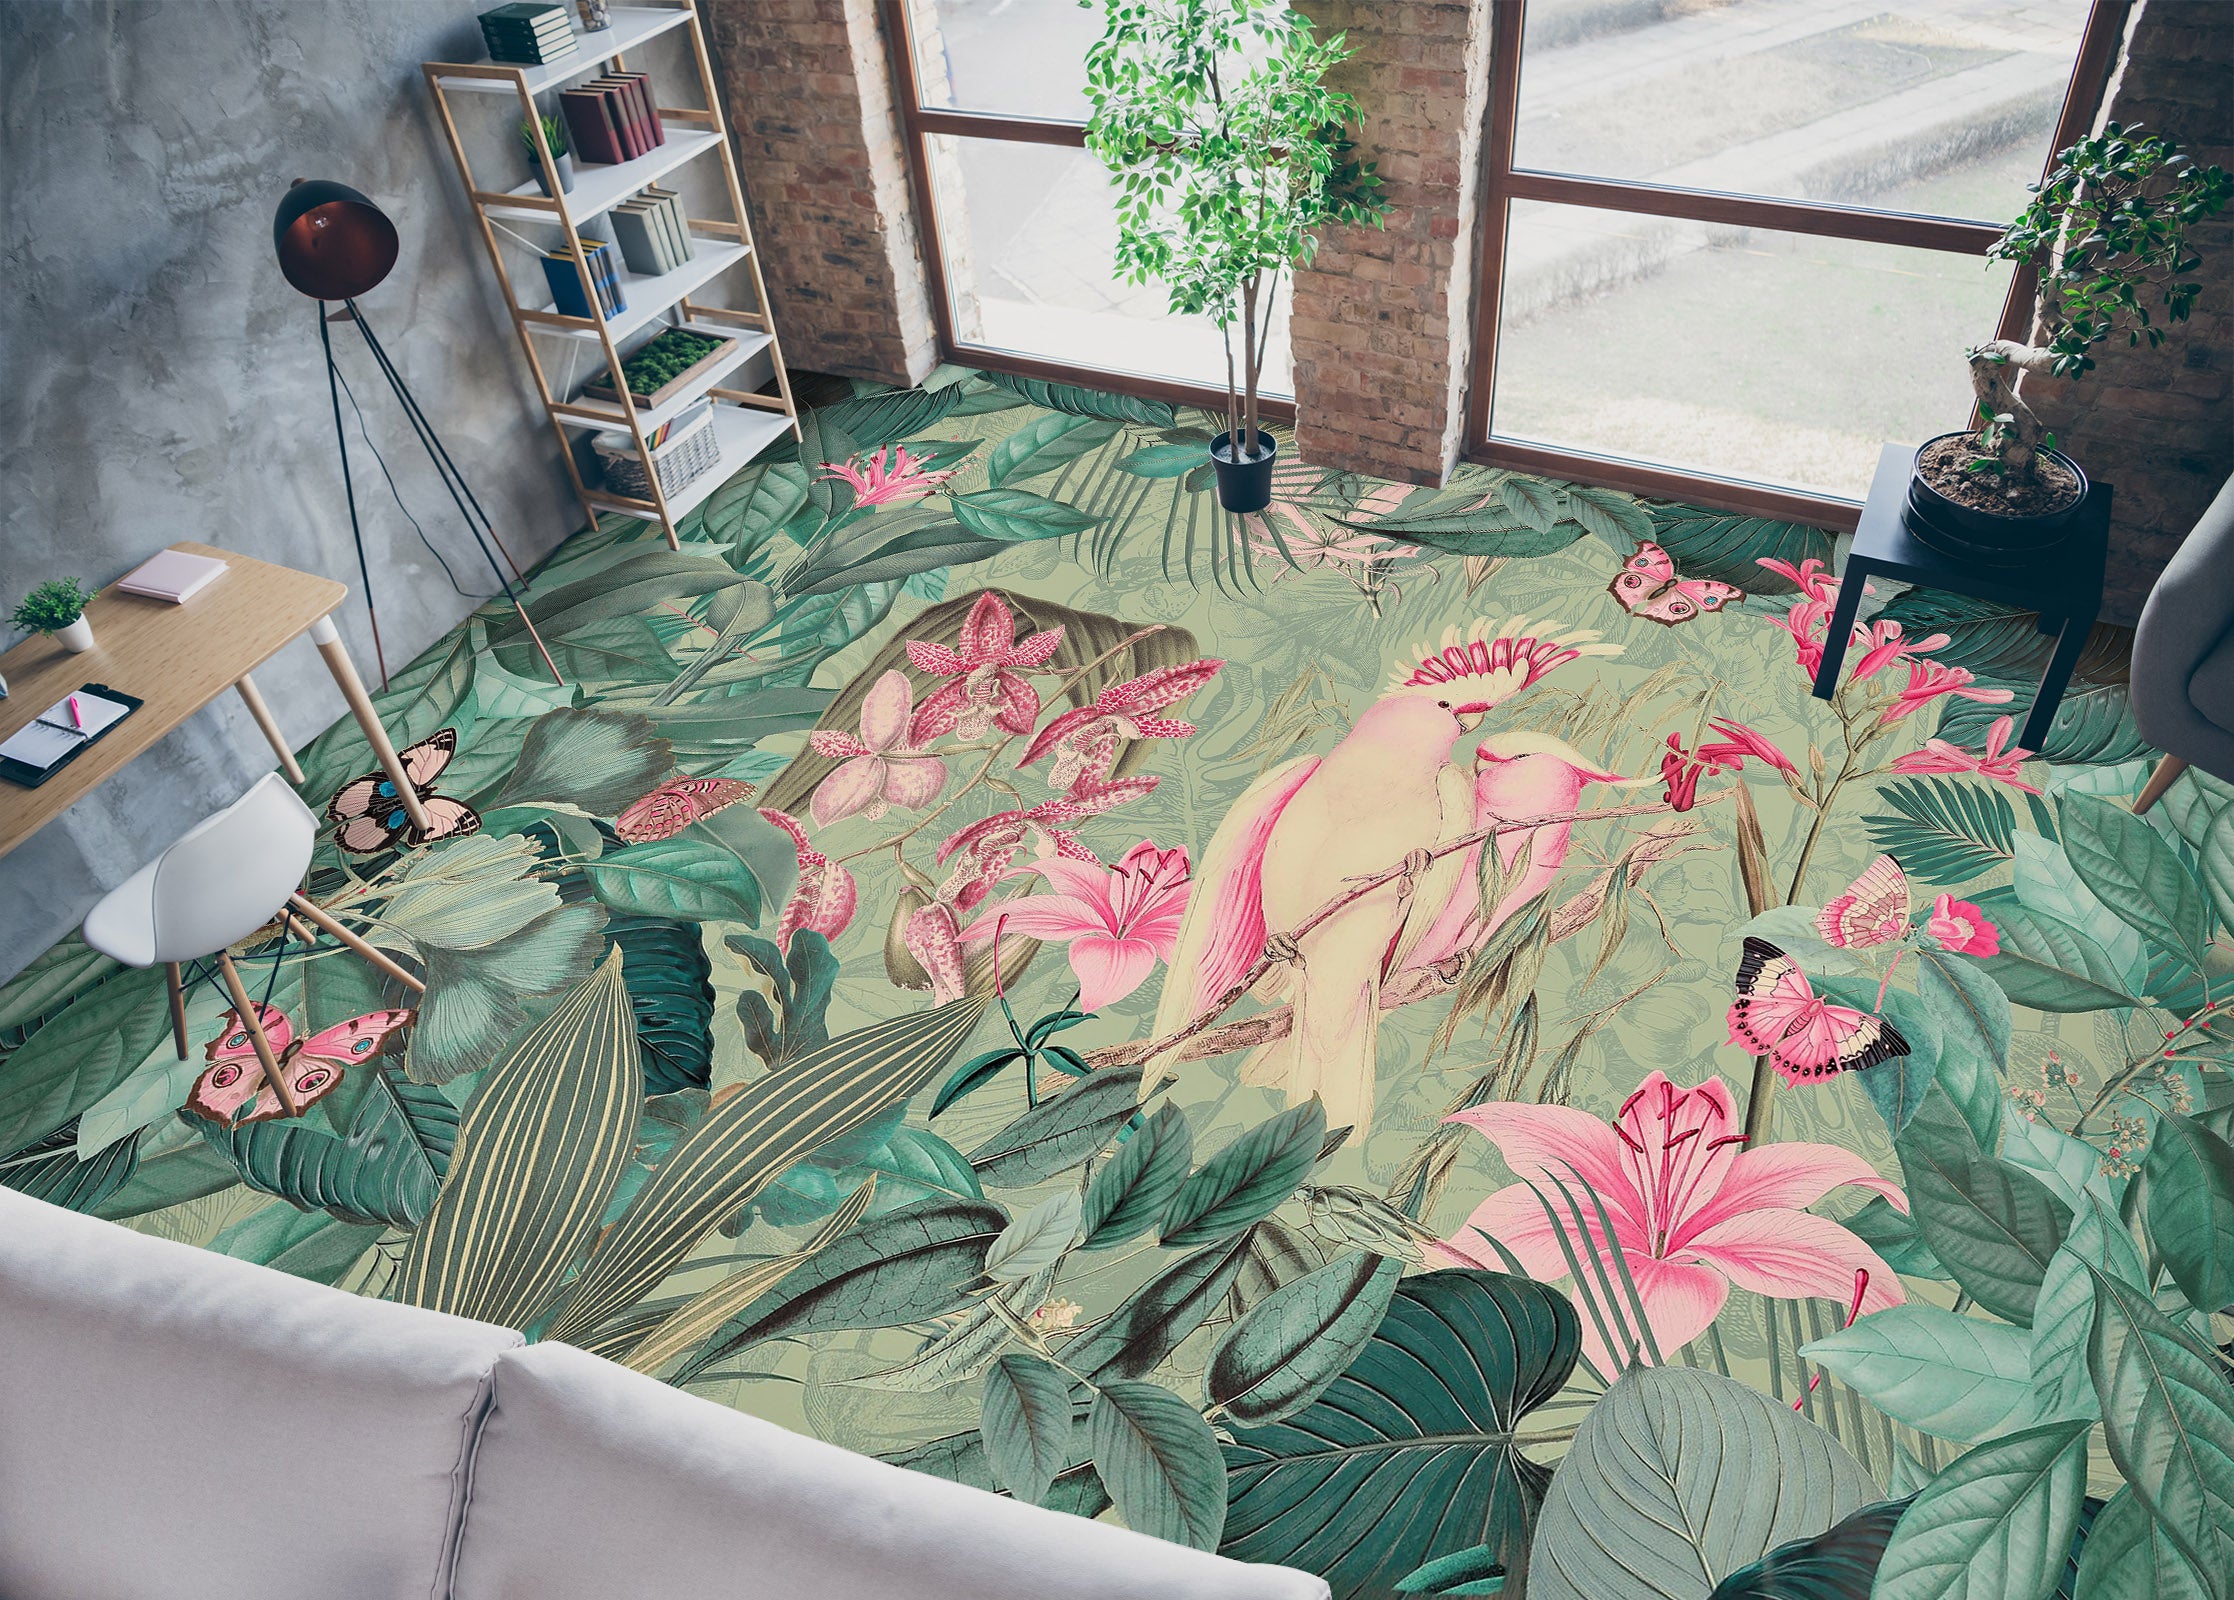 3D Grove Pink Parrot 104140 Andrea Haase Floor Mural  Wallpaper Murals Self-Adhesive Removable Print Epoxy